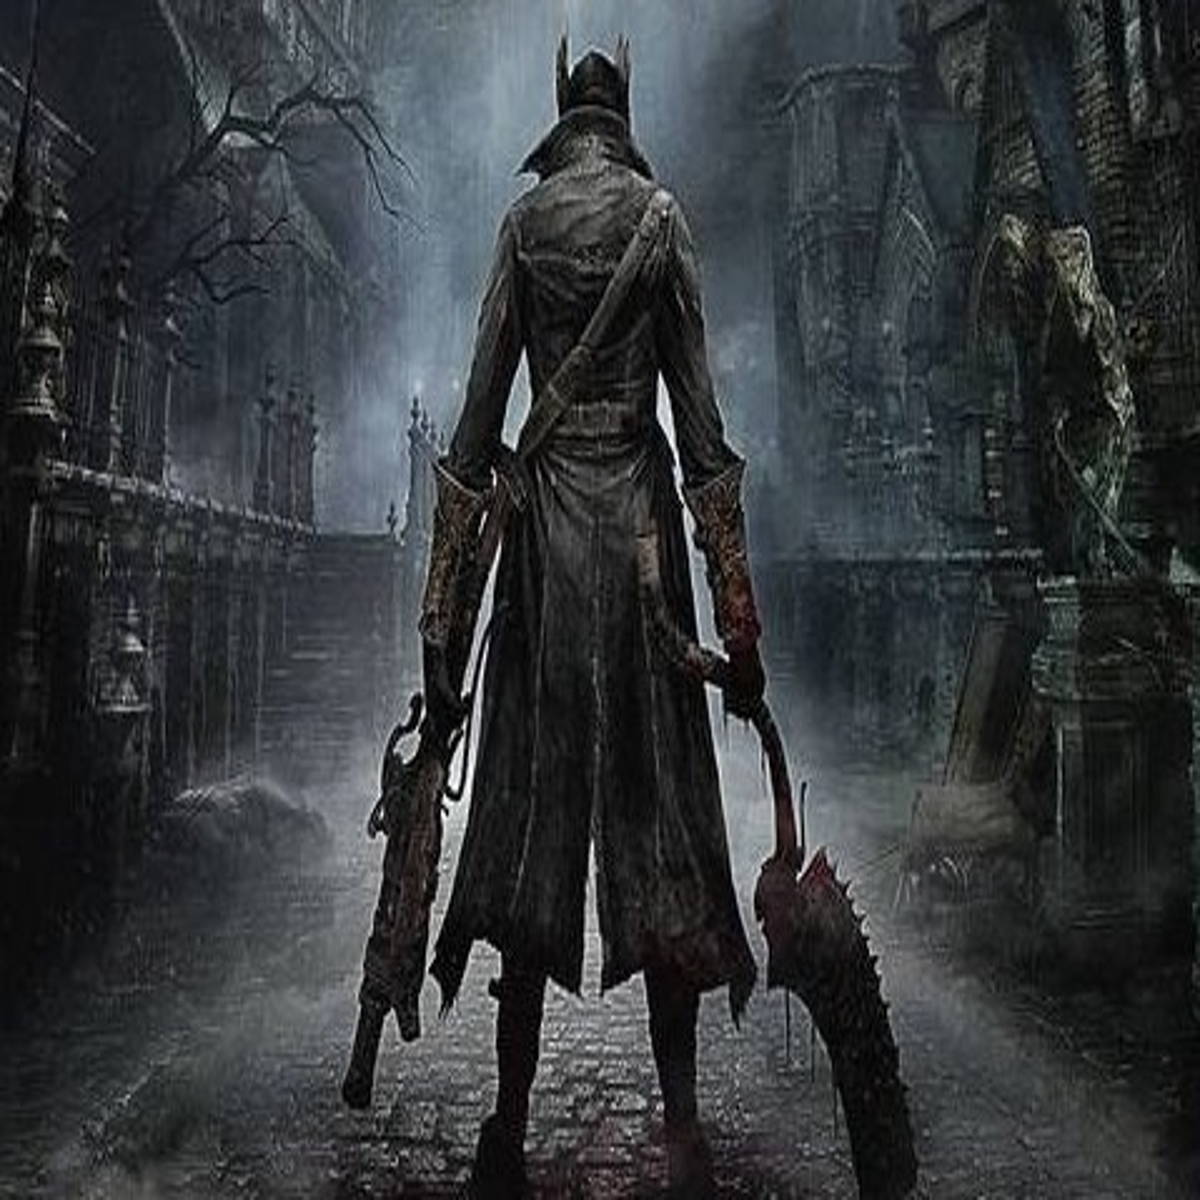 Bloodborne (PS4) — Análise do jogo [pt-BR], by Raphael R.